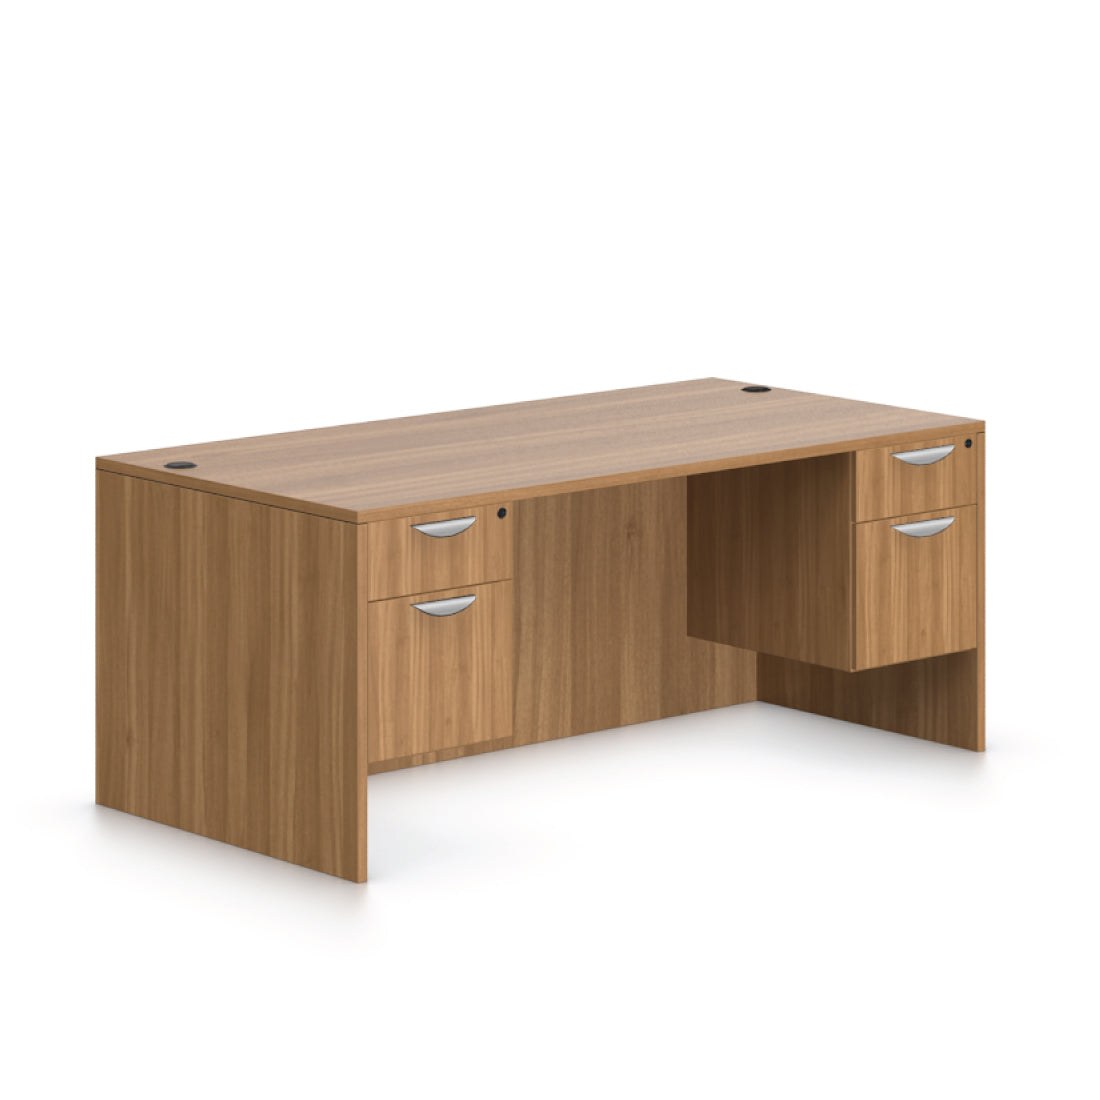 71"x36" Rectangular Desk with Two Hanging B/F pedestal - Kainosbuy.com